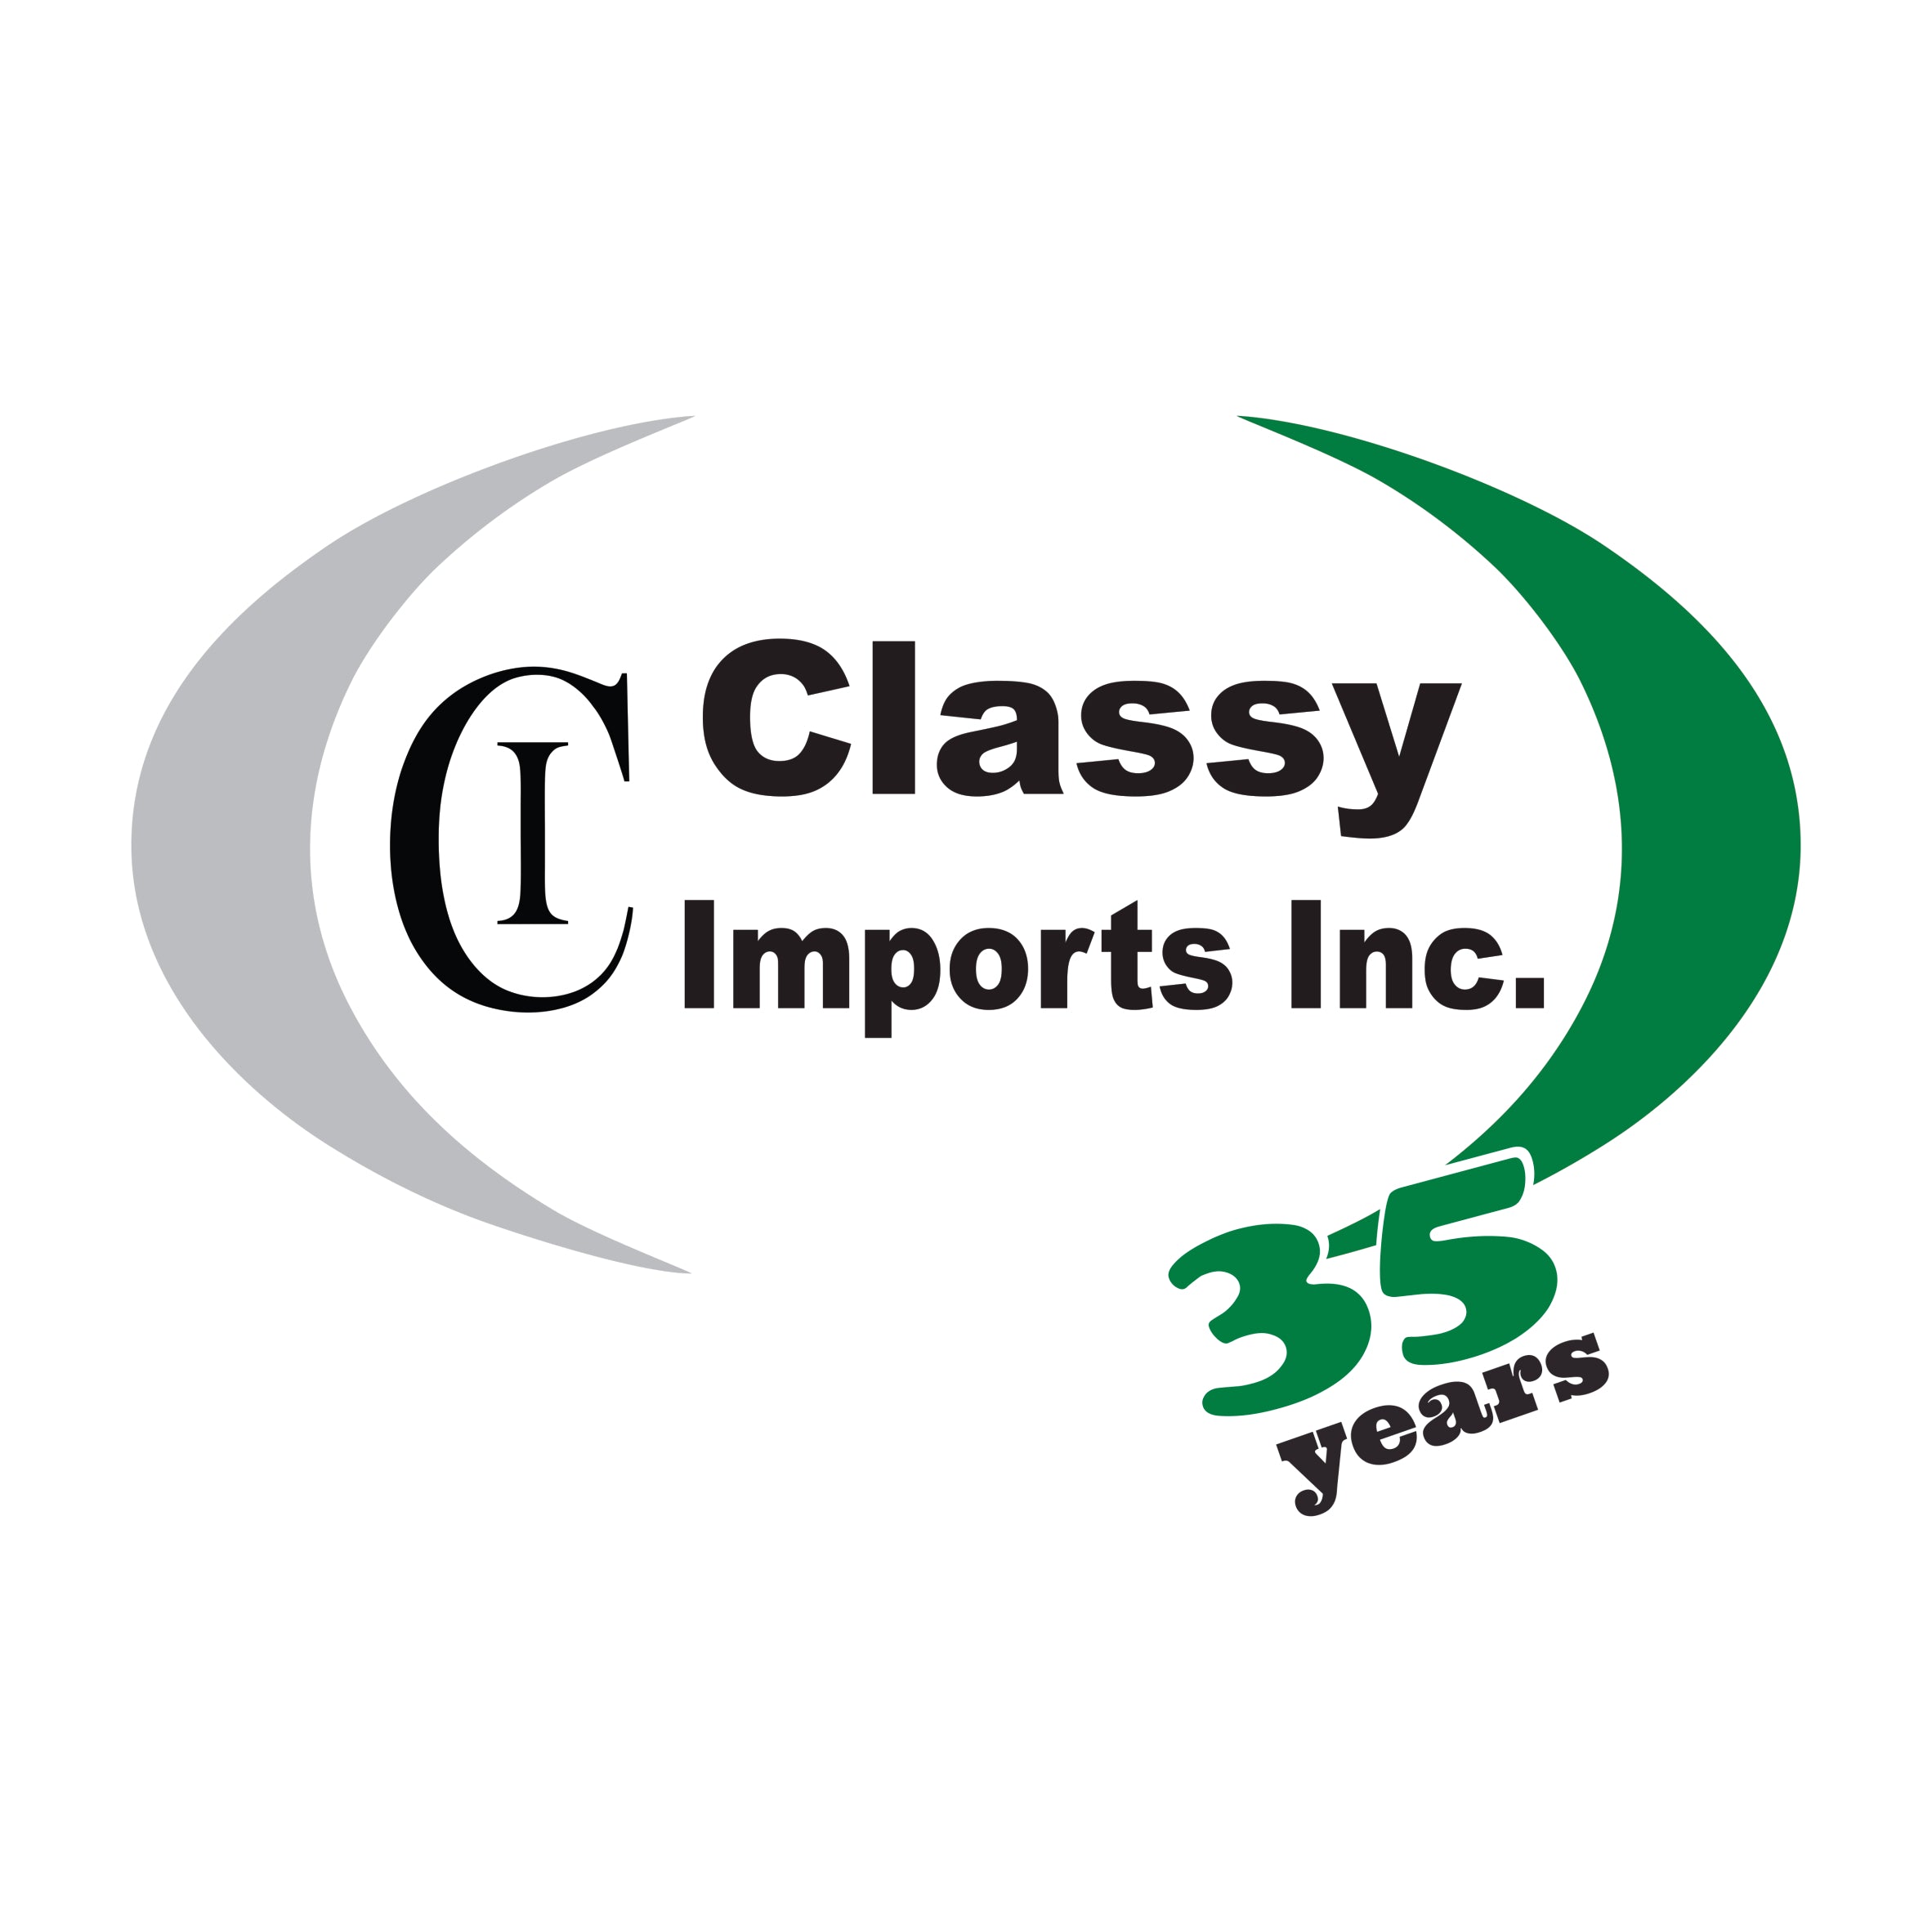 Classy Imports Inc